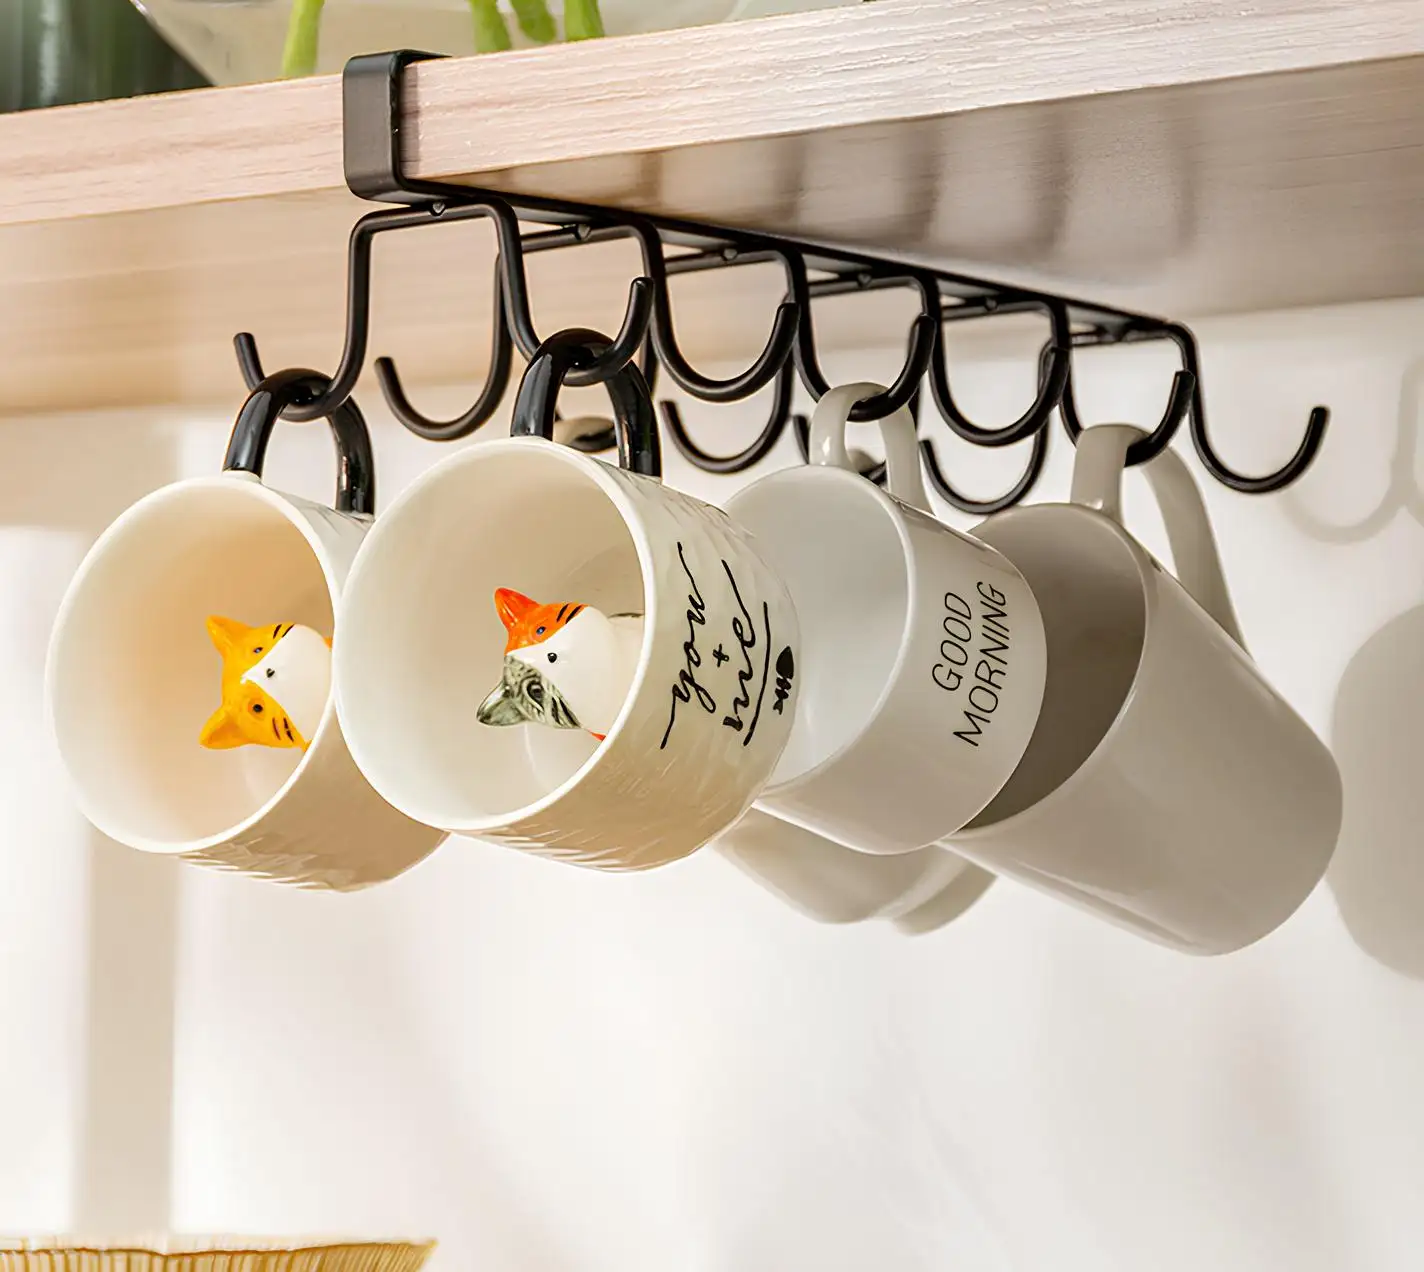 Gruwill Customizable Metal Hook Rack Coffee Cup Hook Wall Mounted Kitchen Accessory